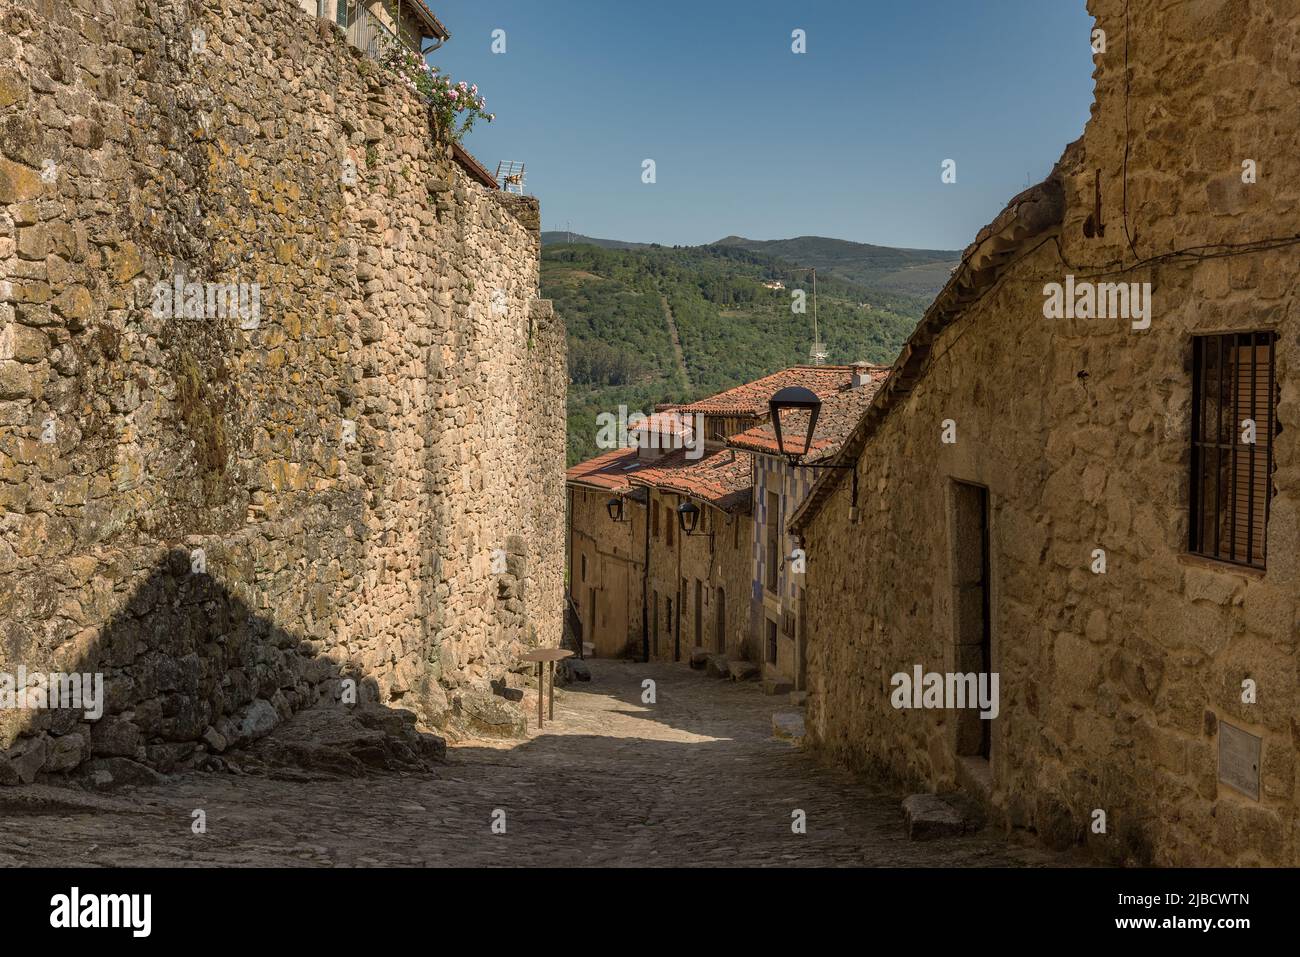 the historic village center of Miranda del castanar, Salamanca, Castile and Leon, Spain Stock Photo